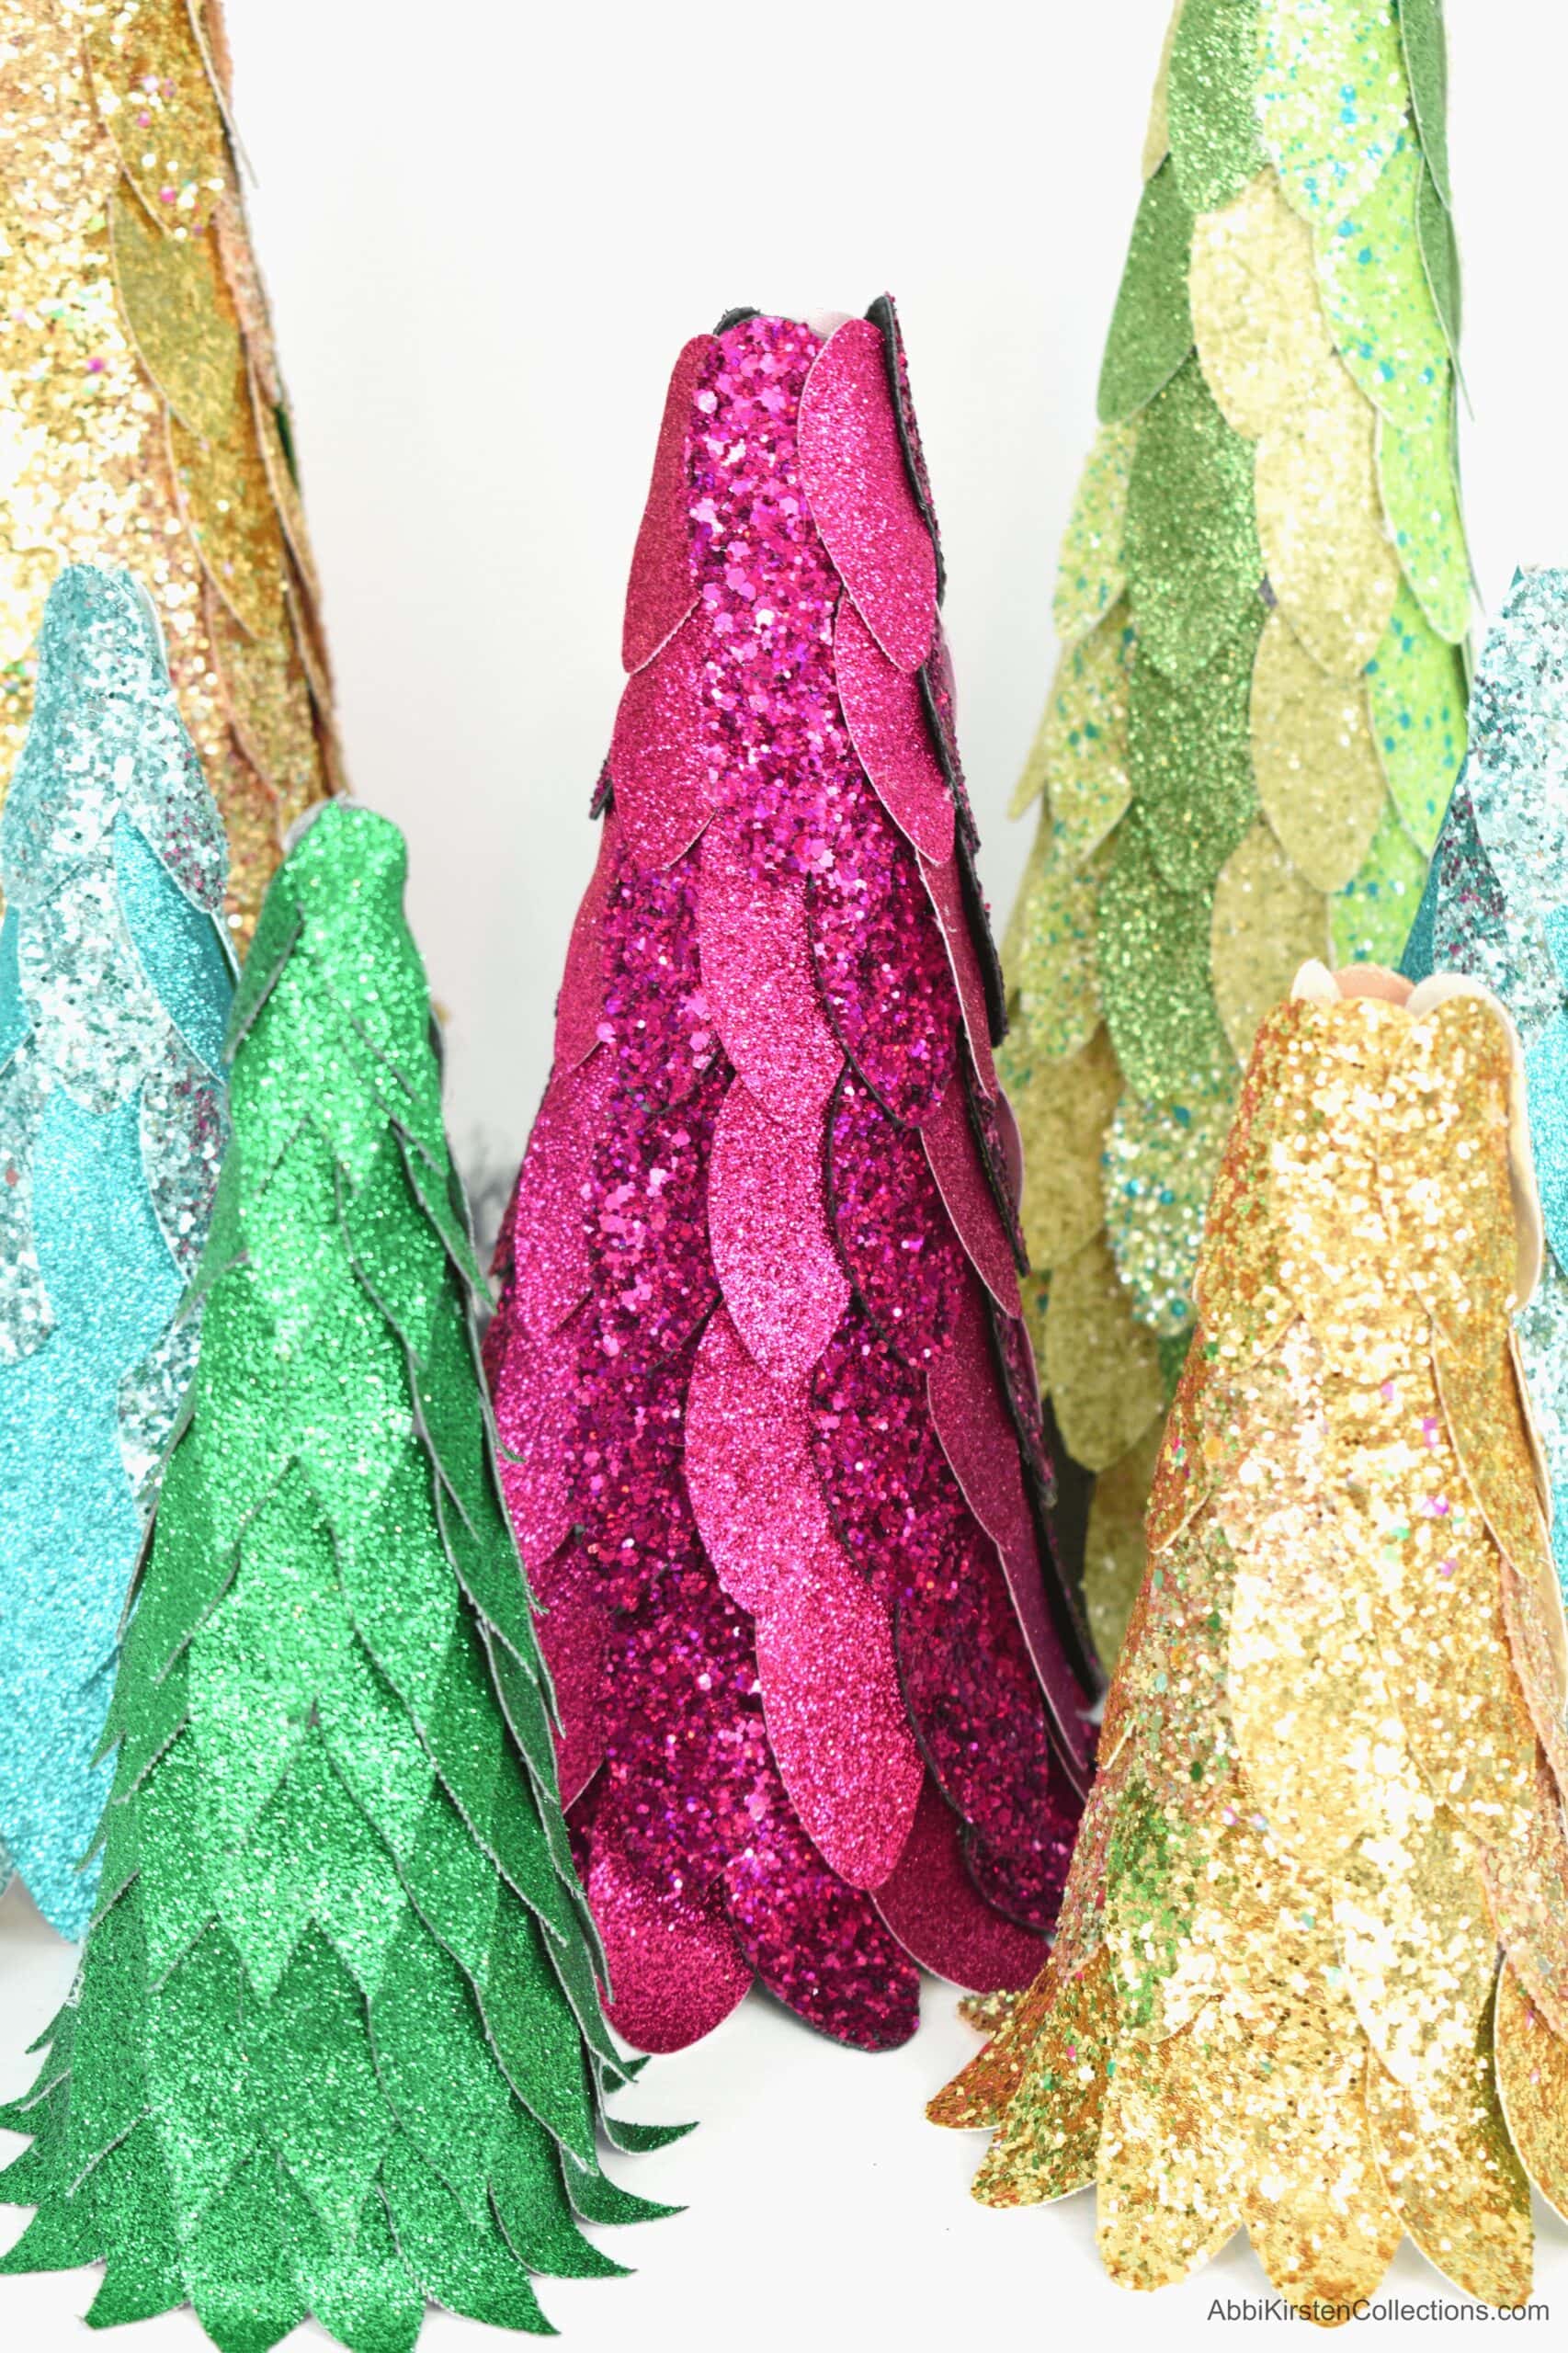 Lea'Bilitie Glitter Foam Decoration Christmas Tree 3D Cutting Die